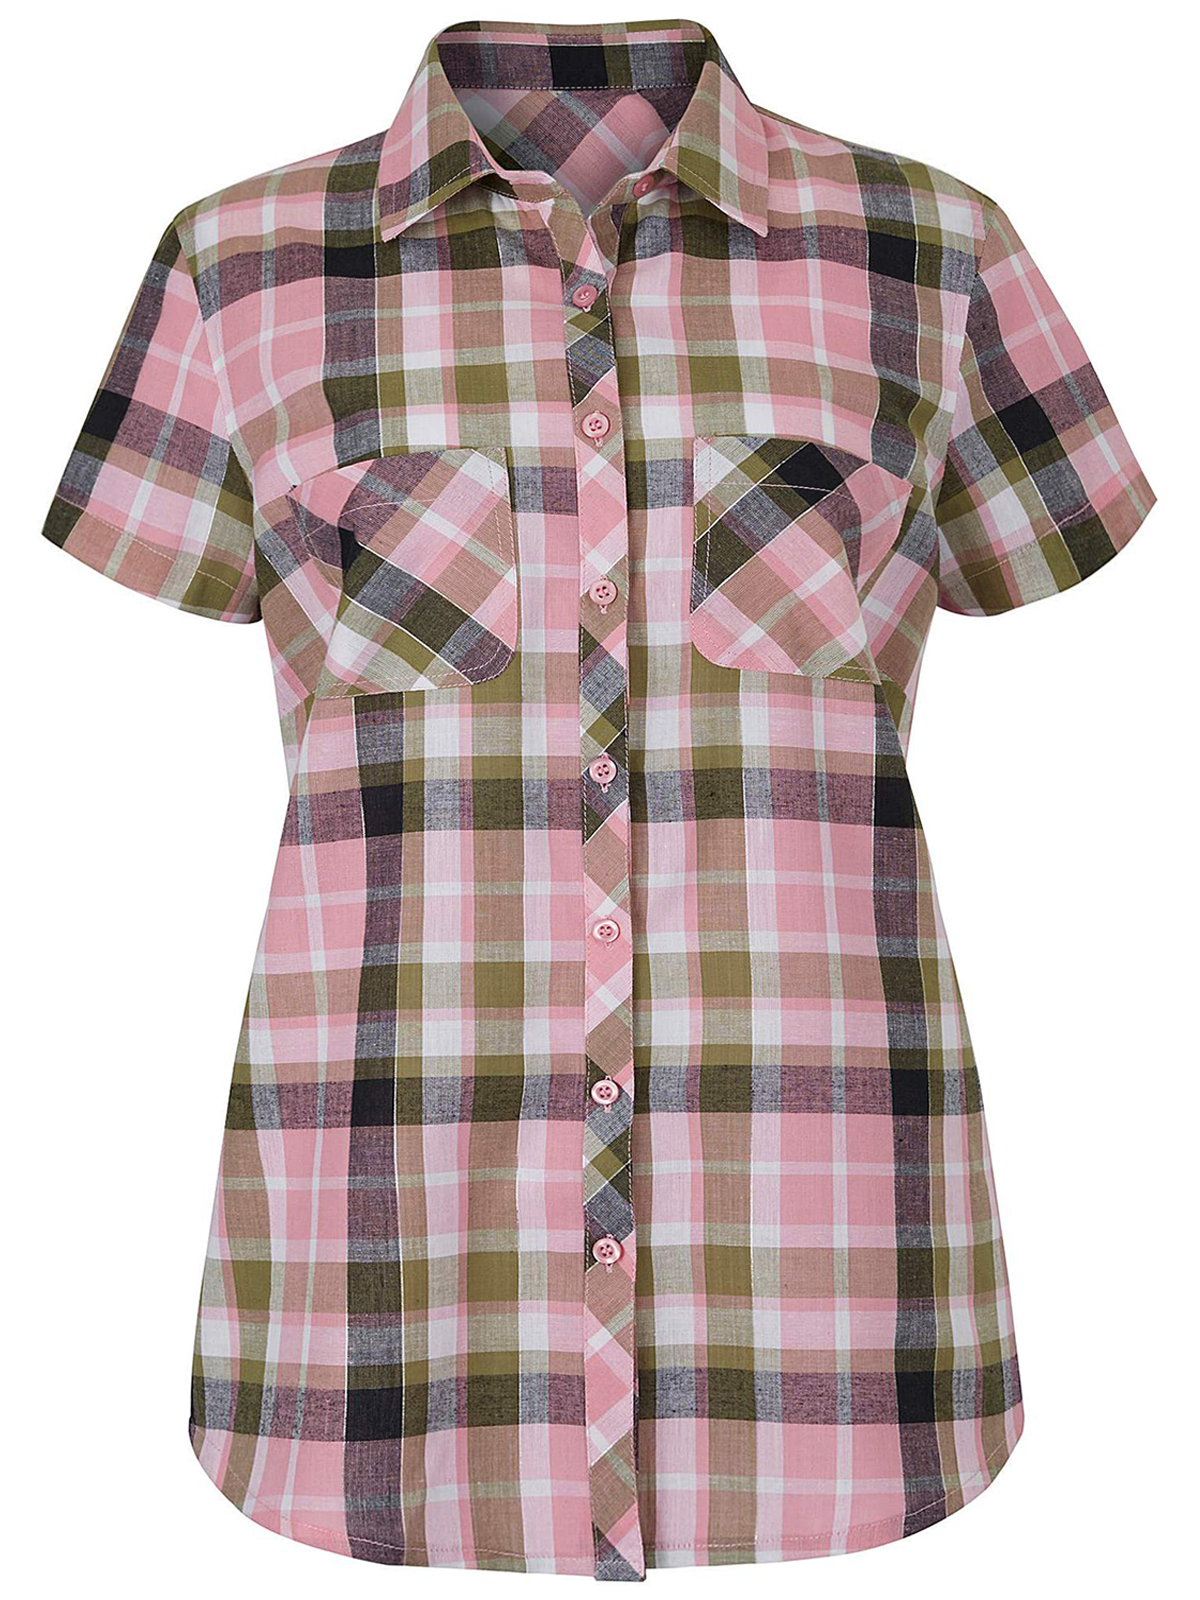 Julipa - - Julipa PINK Short Sleeve Checked Shirt - Plus Size 12 to 28